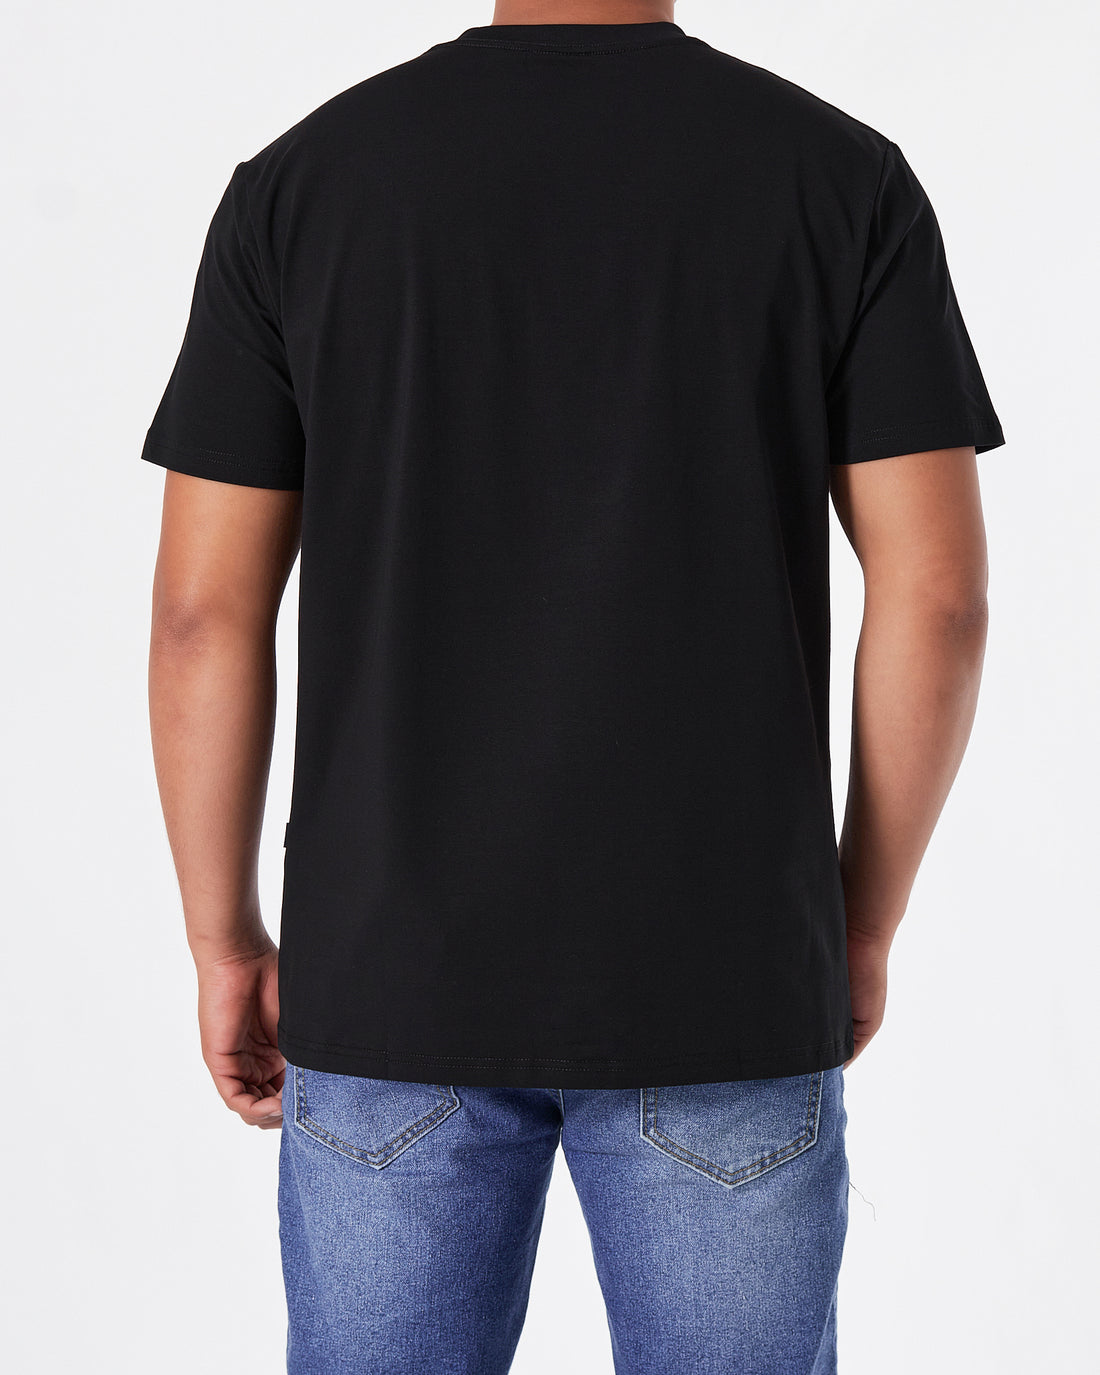 HUG Logo Printed Men Black T-Shirt 16.90